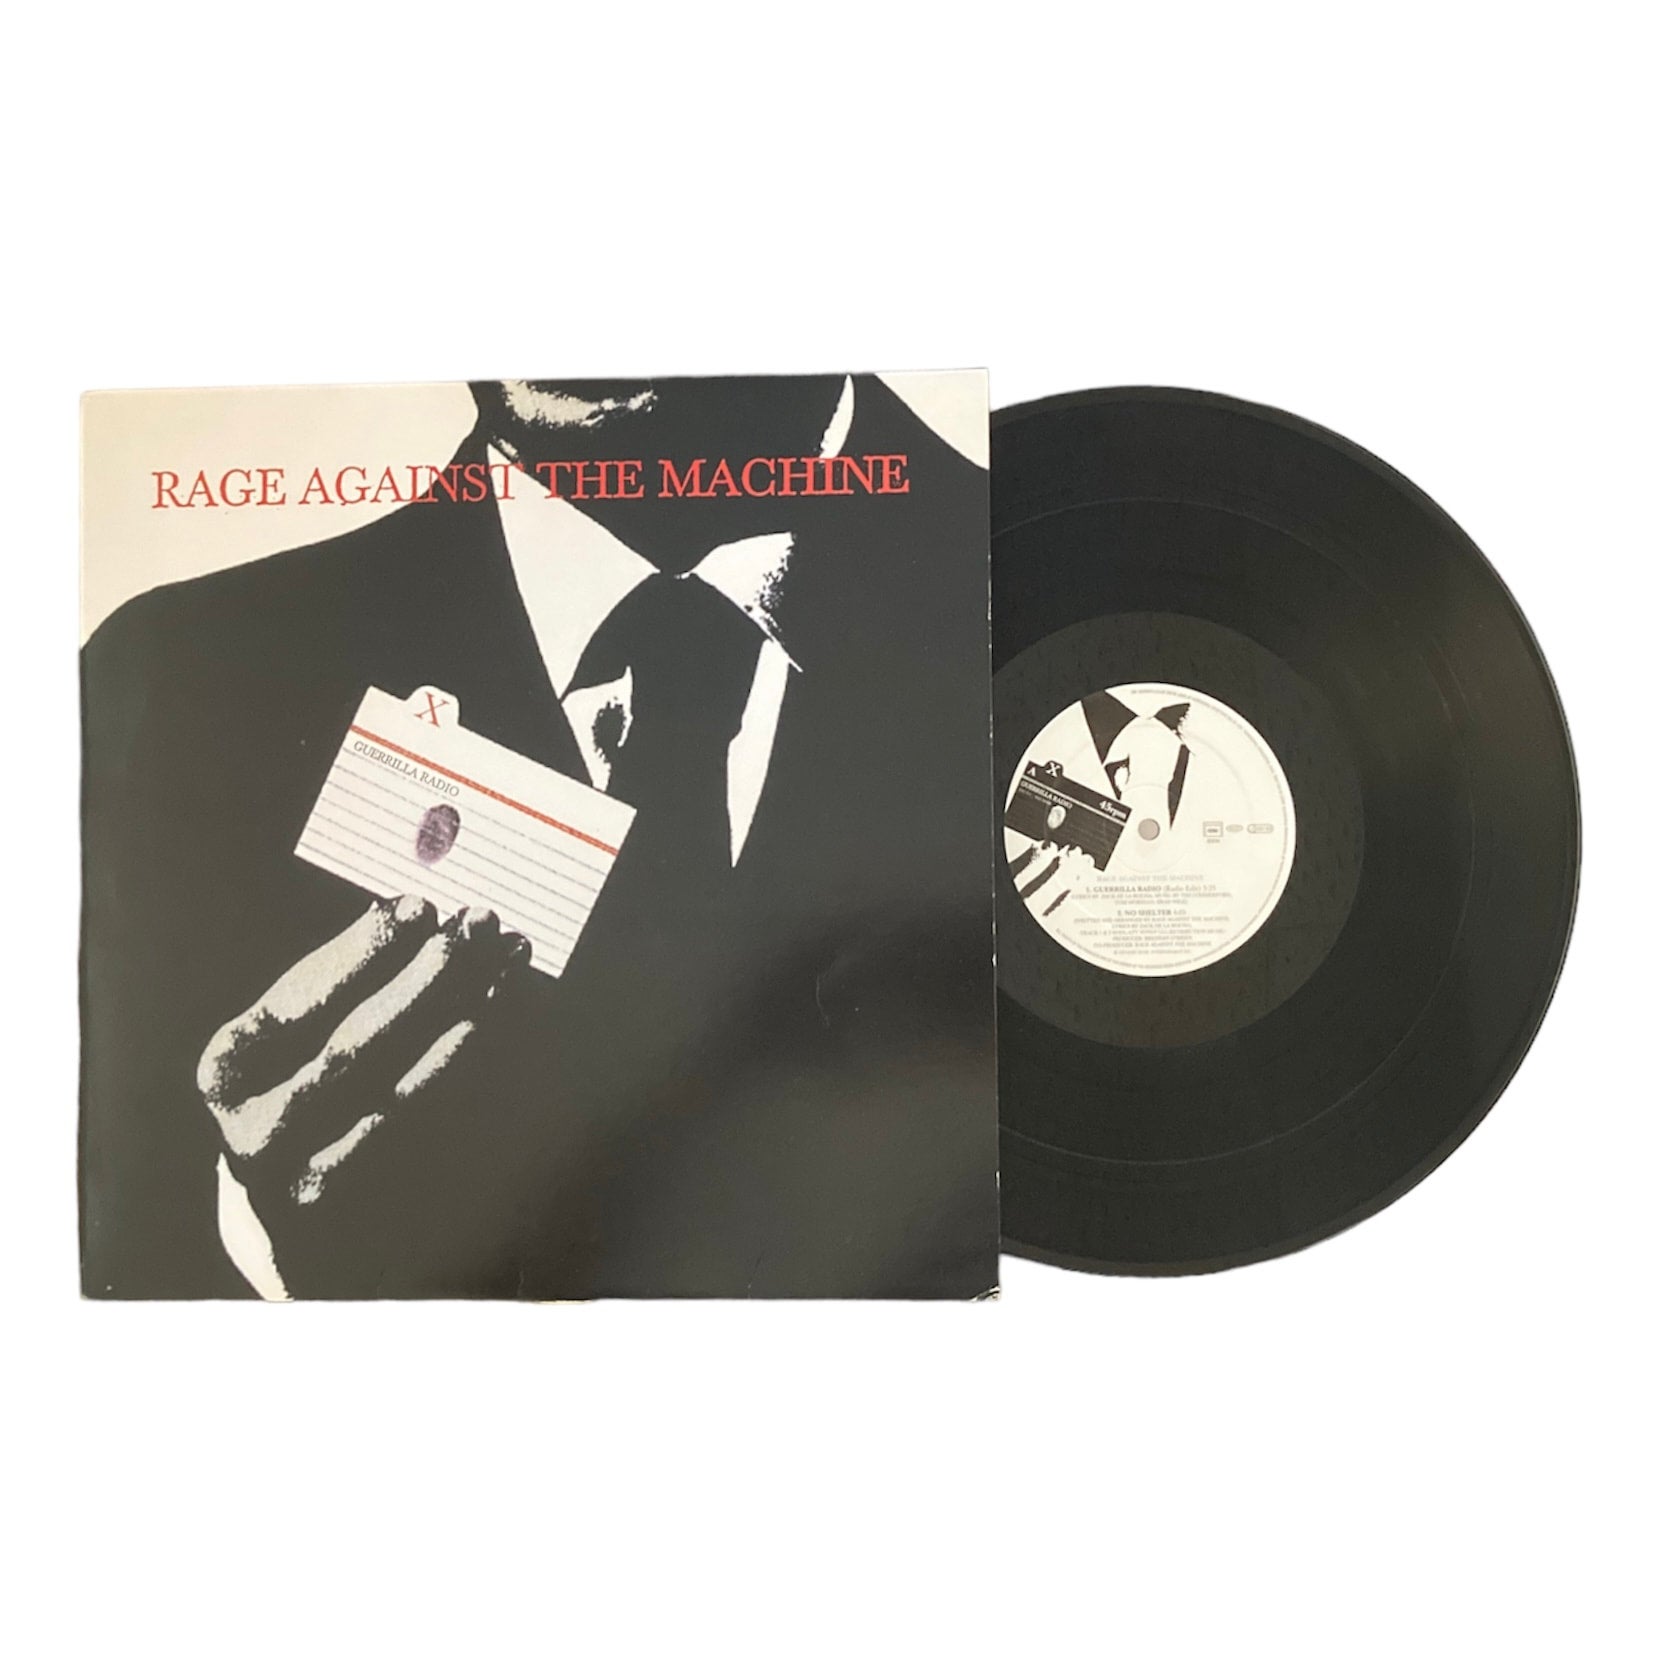 RAY ALEXANDER TECHNIQUE Let´s Talk LP NEW VINYL Now-Again reissue